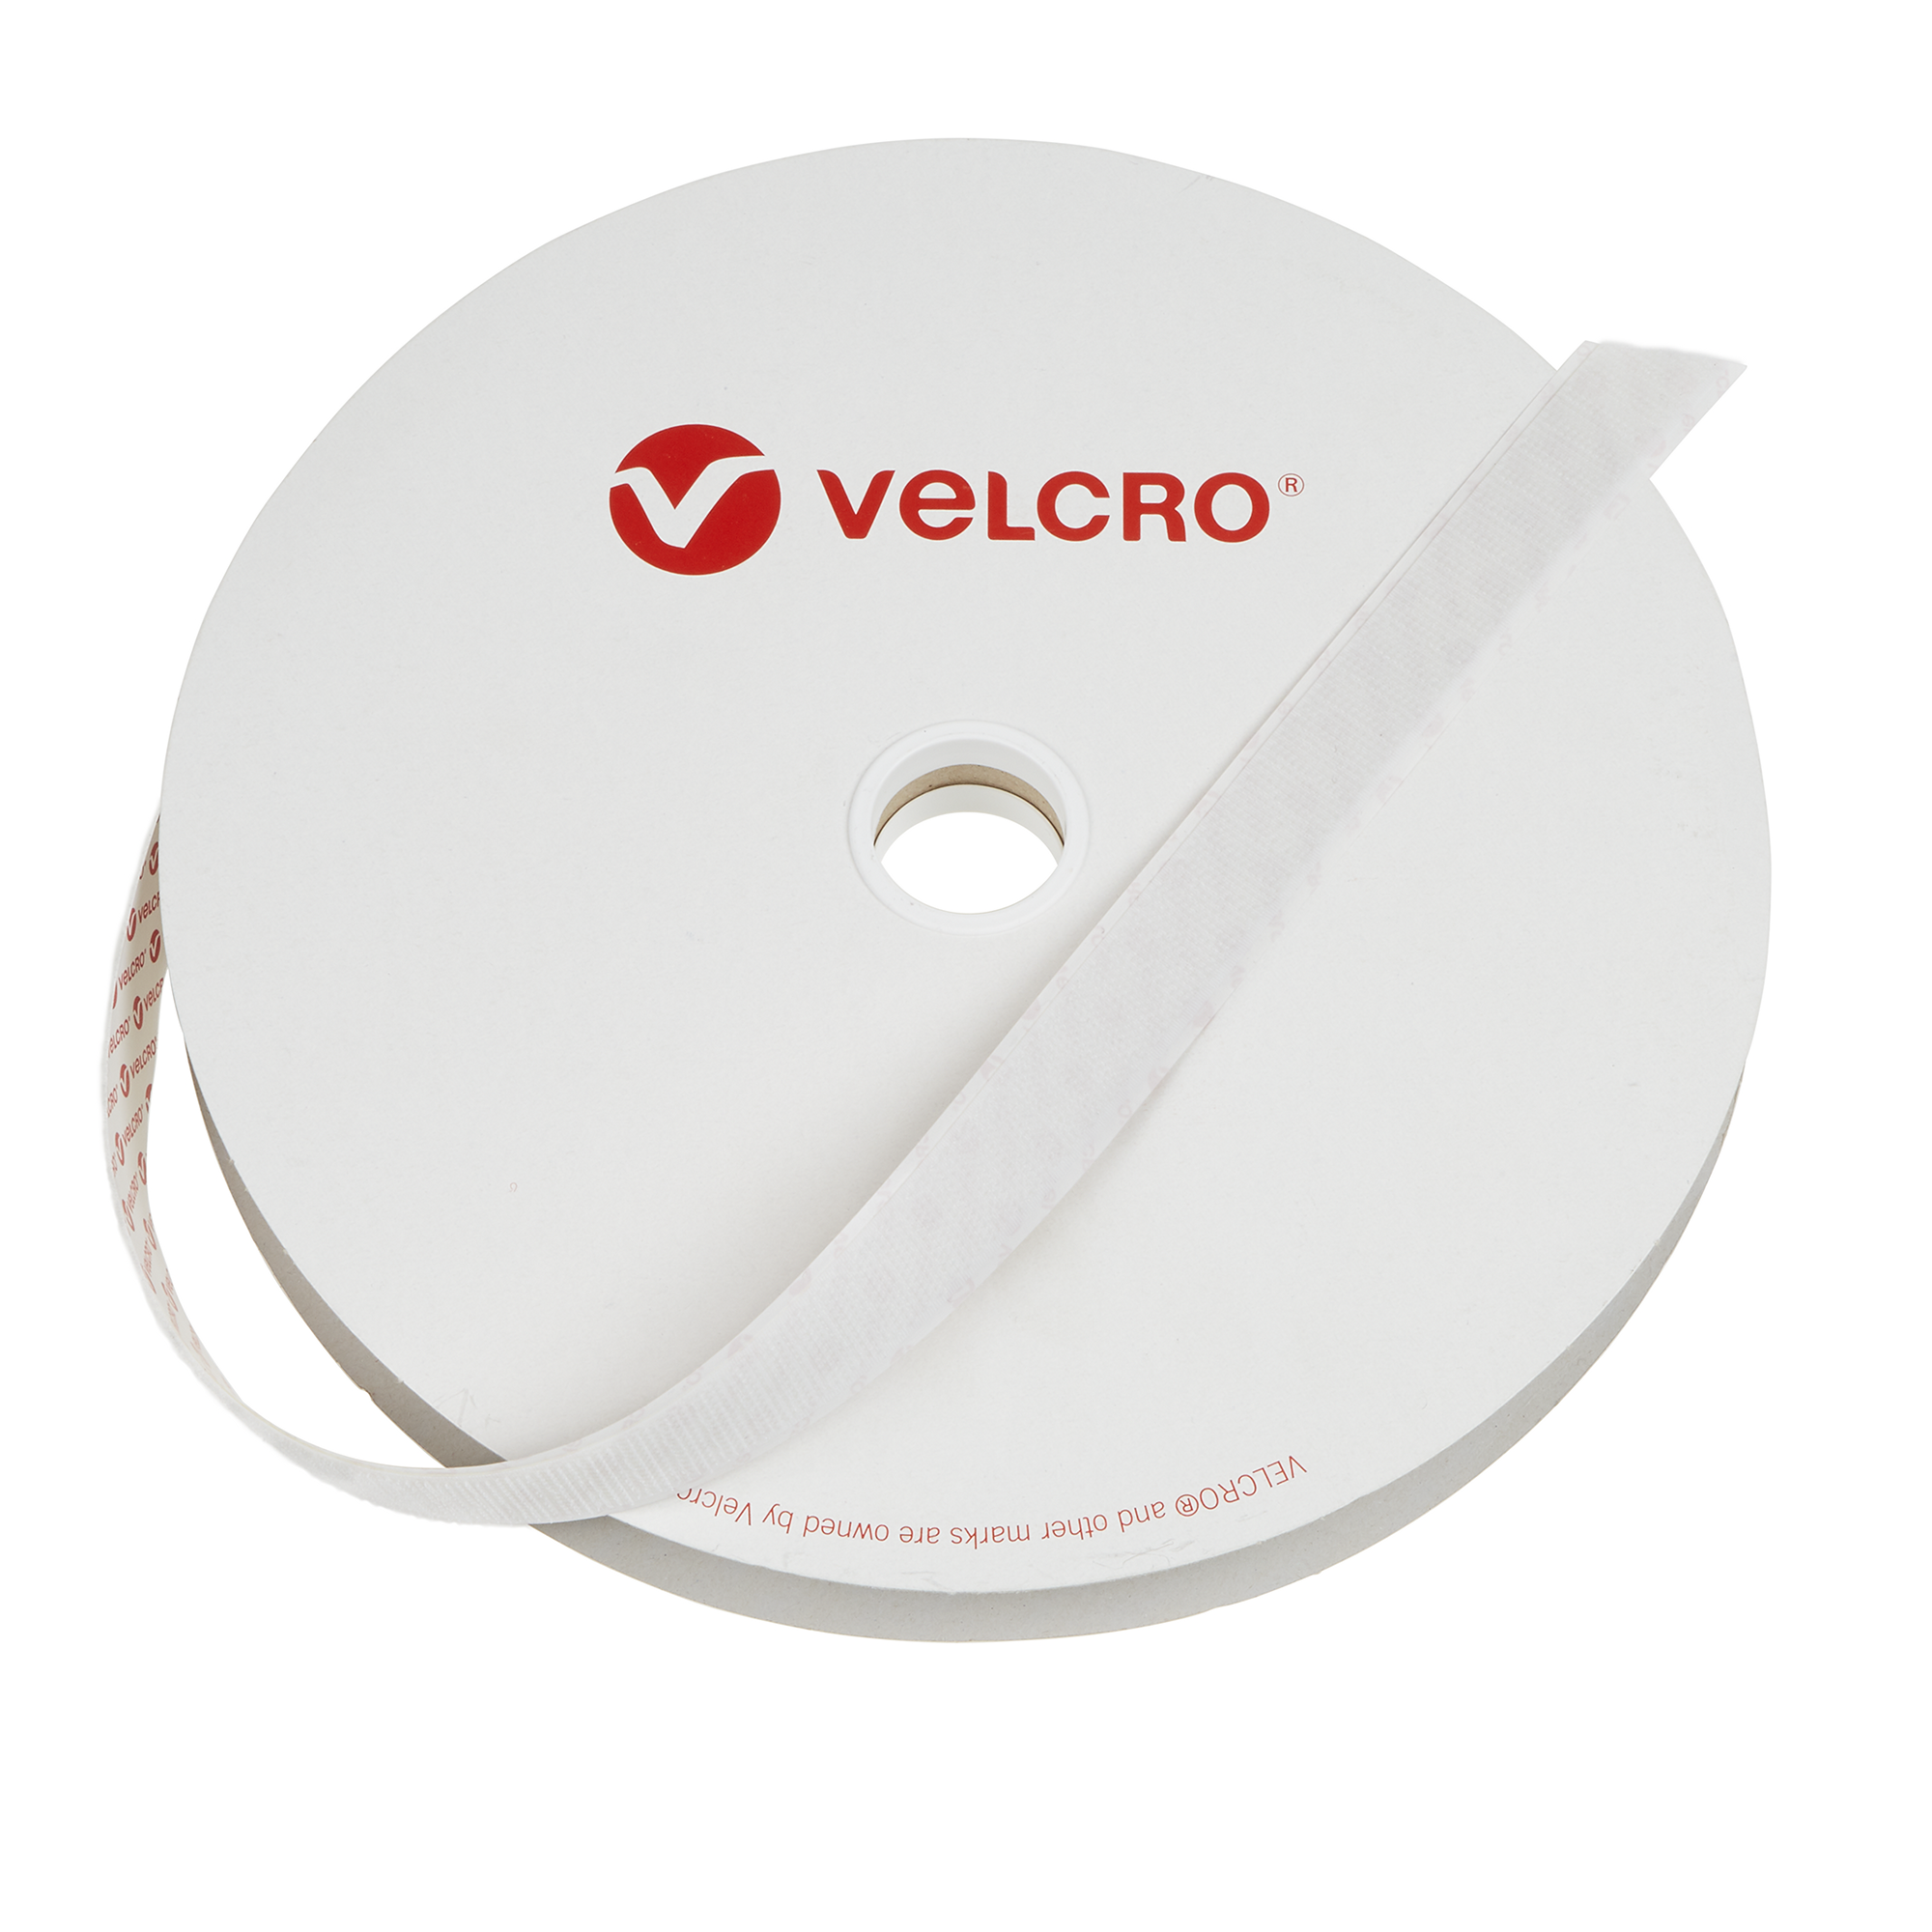 HC1810459 - VELCRO Brand Stick on Tape (Hook Only) - 25mm - White